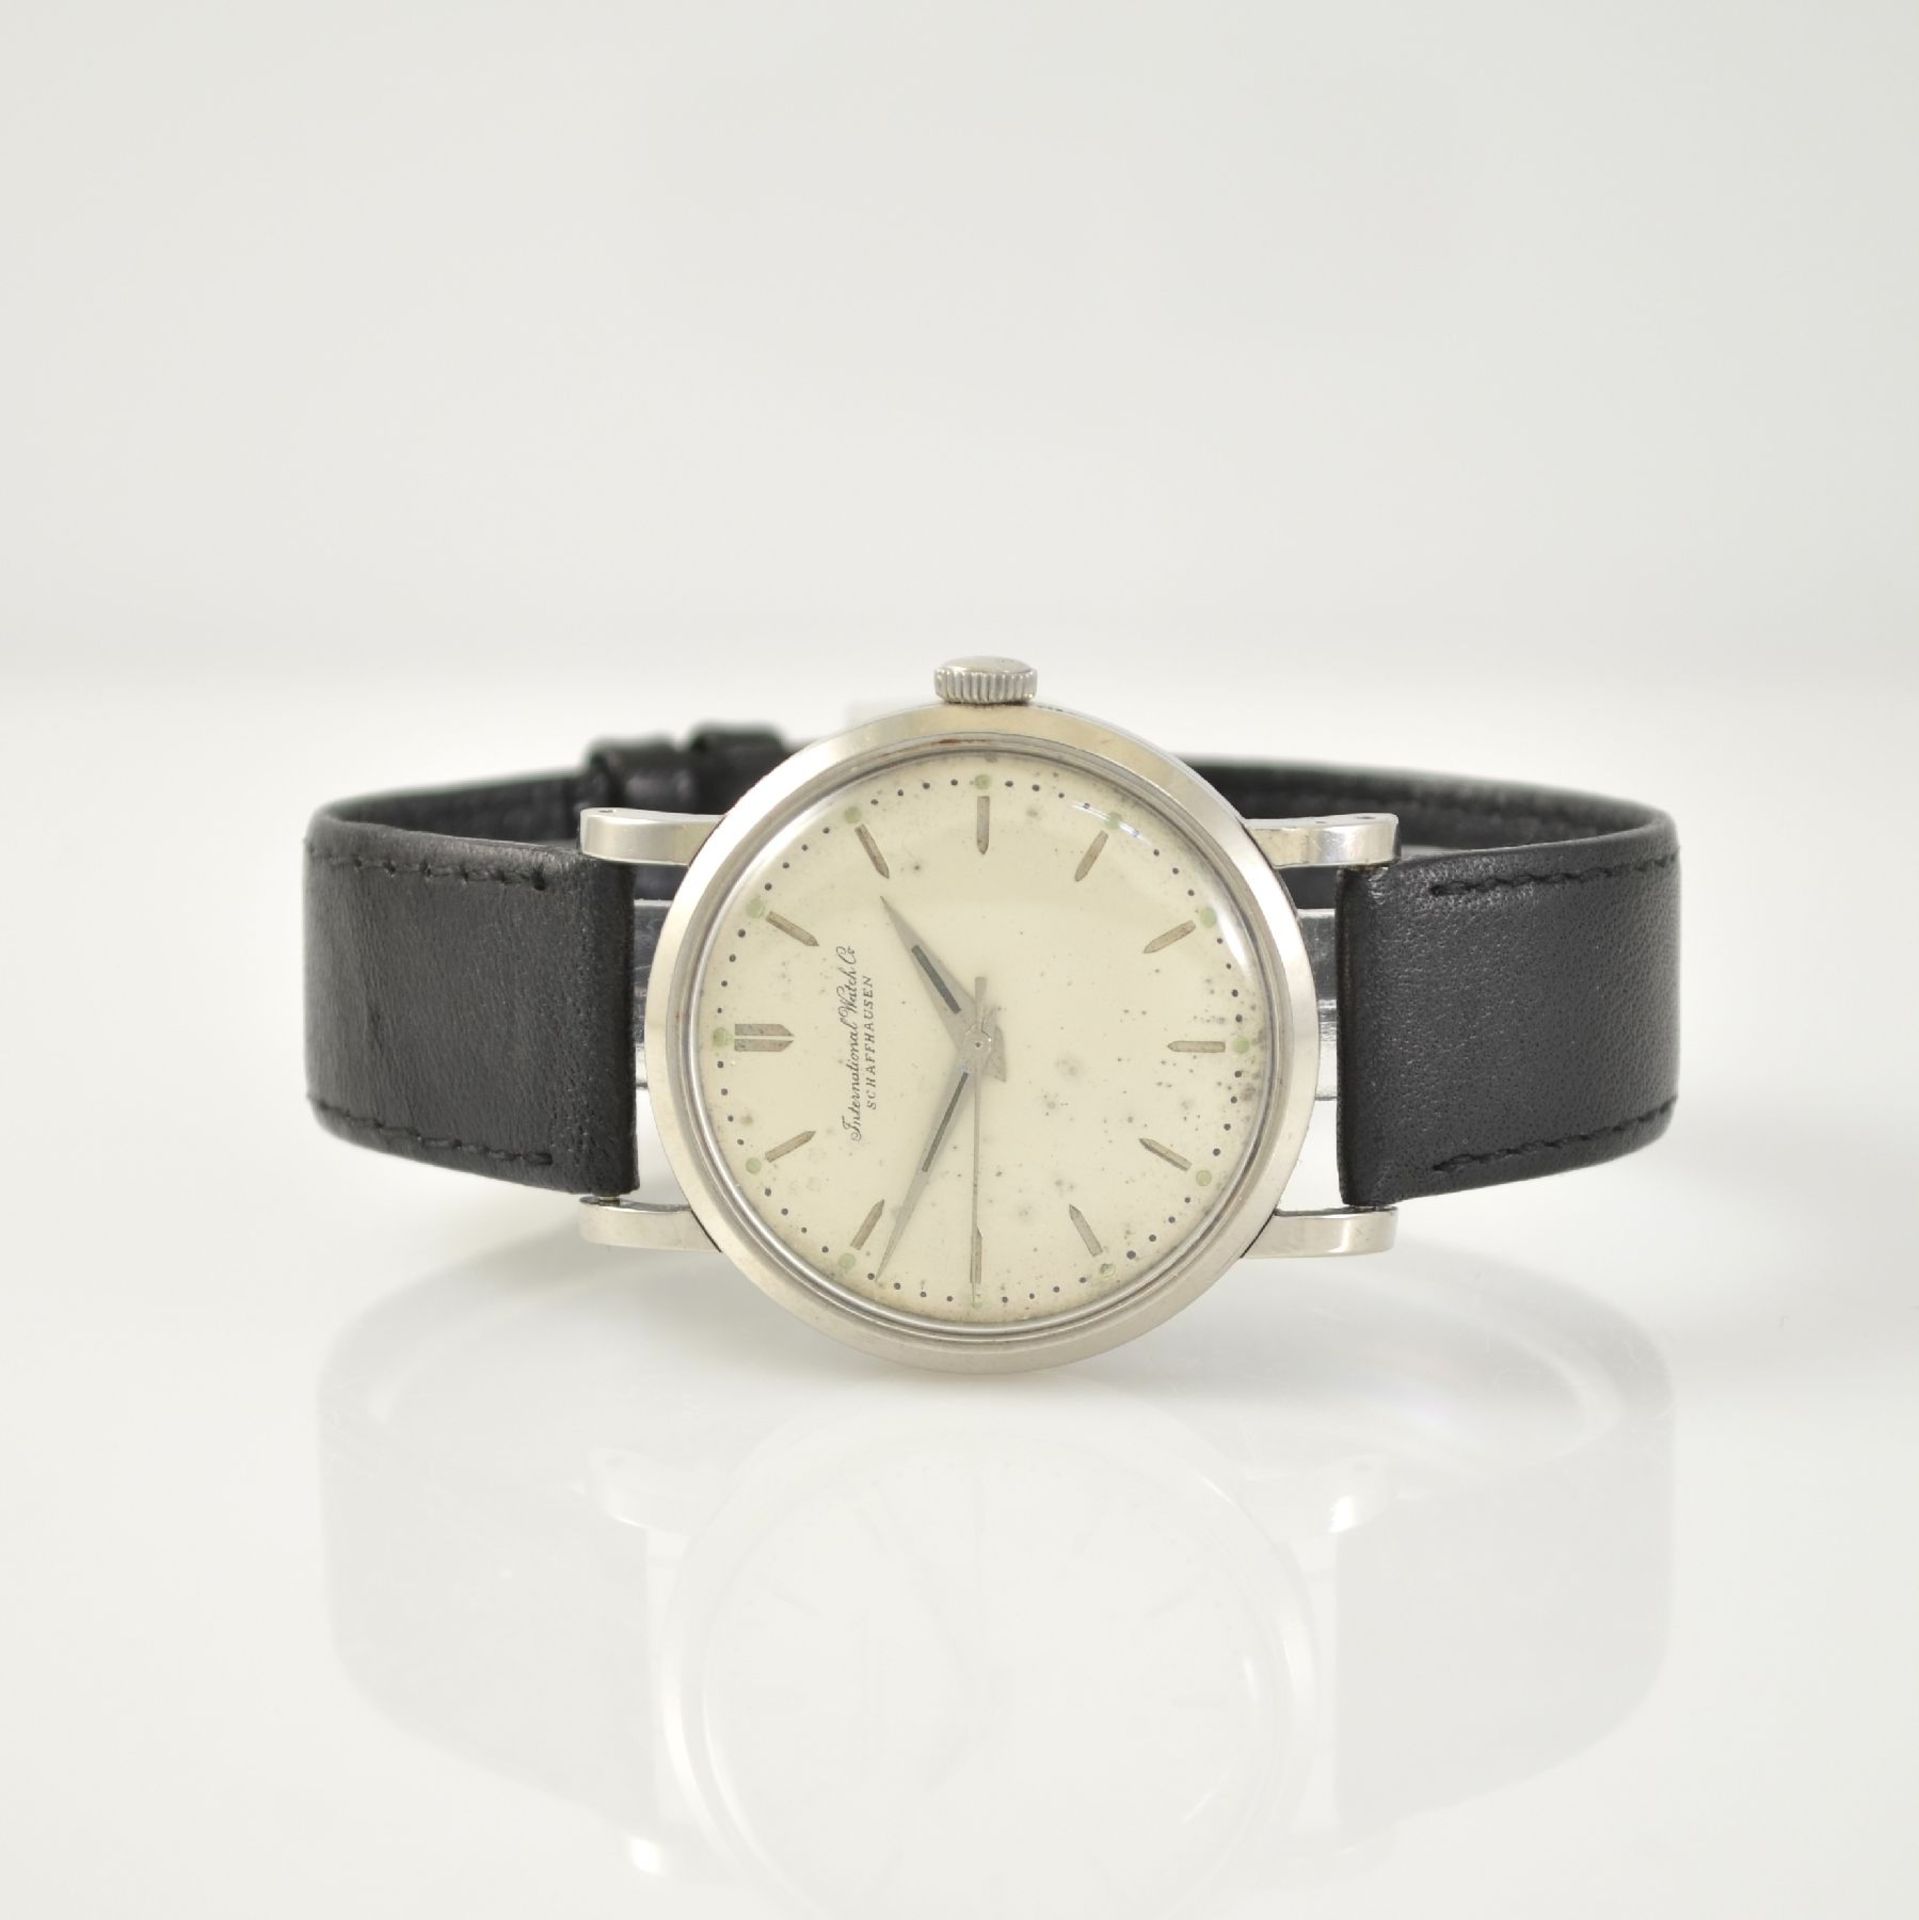 IWC gents wristwatch with calibre 852 in steel, Switzerland around 1955, self winding, 3-piece